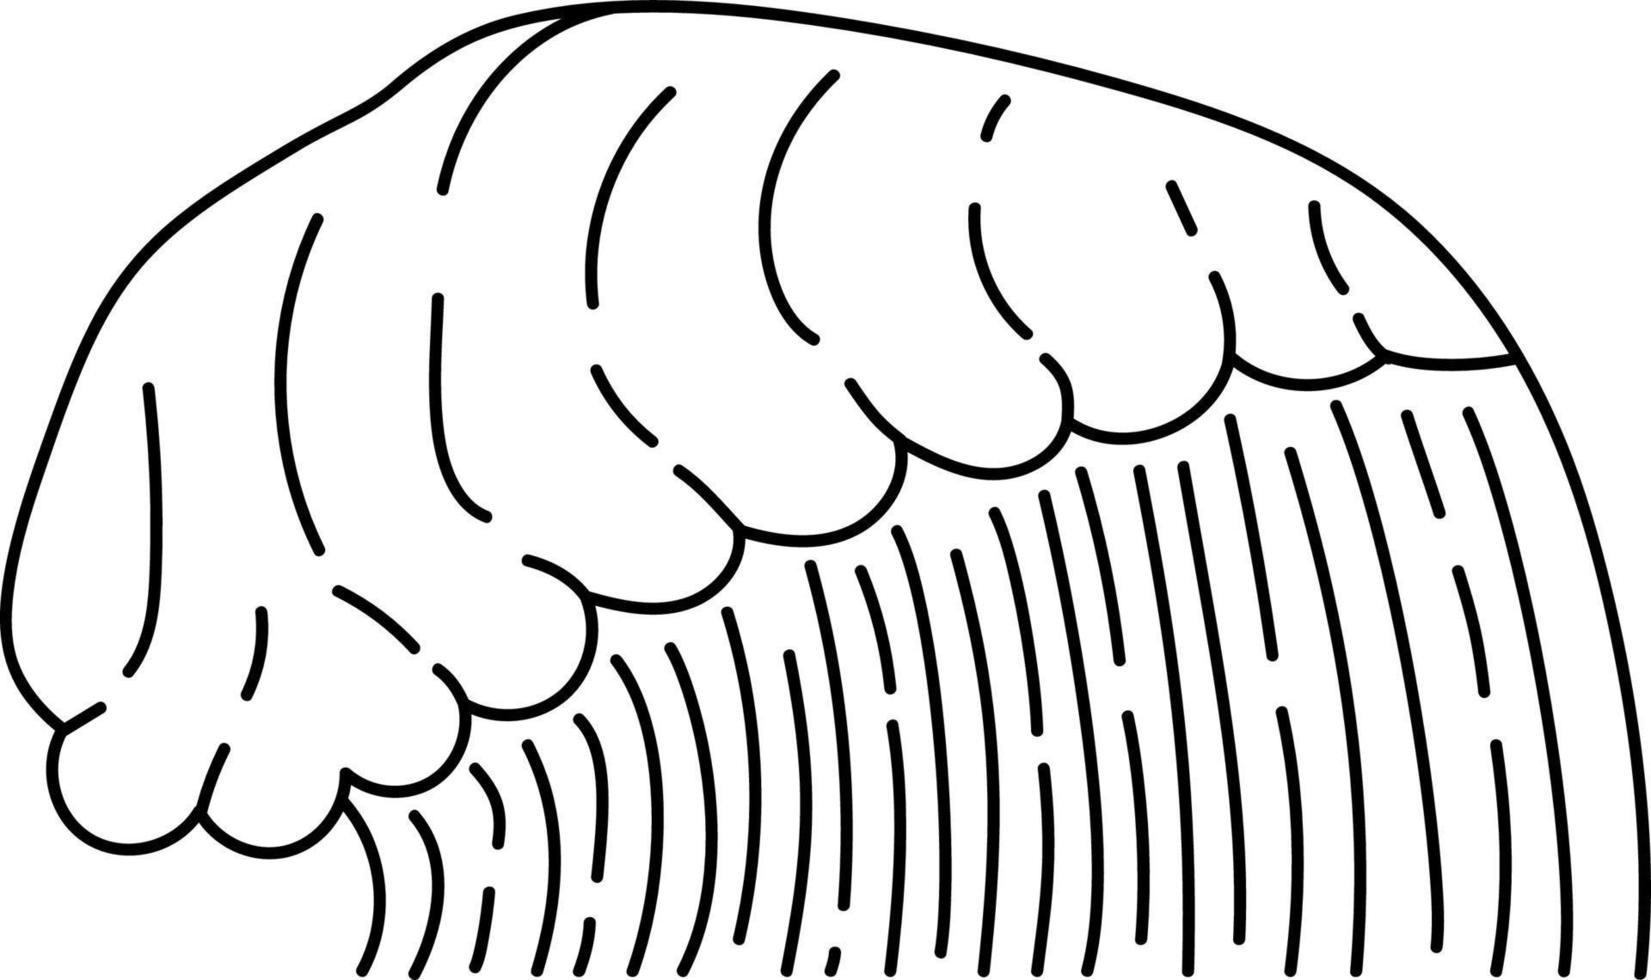 Ocean wave beach hand drawn on white background vector